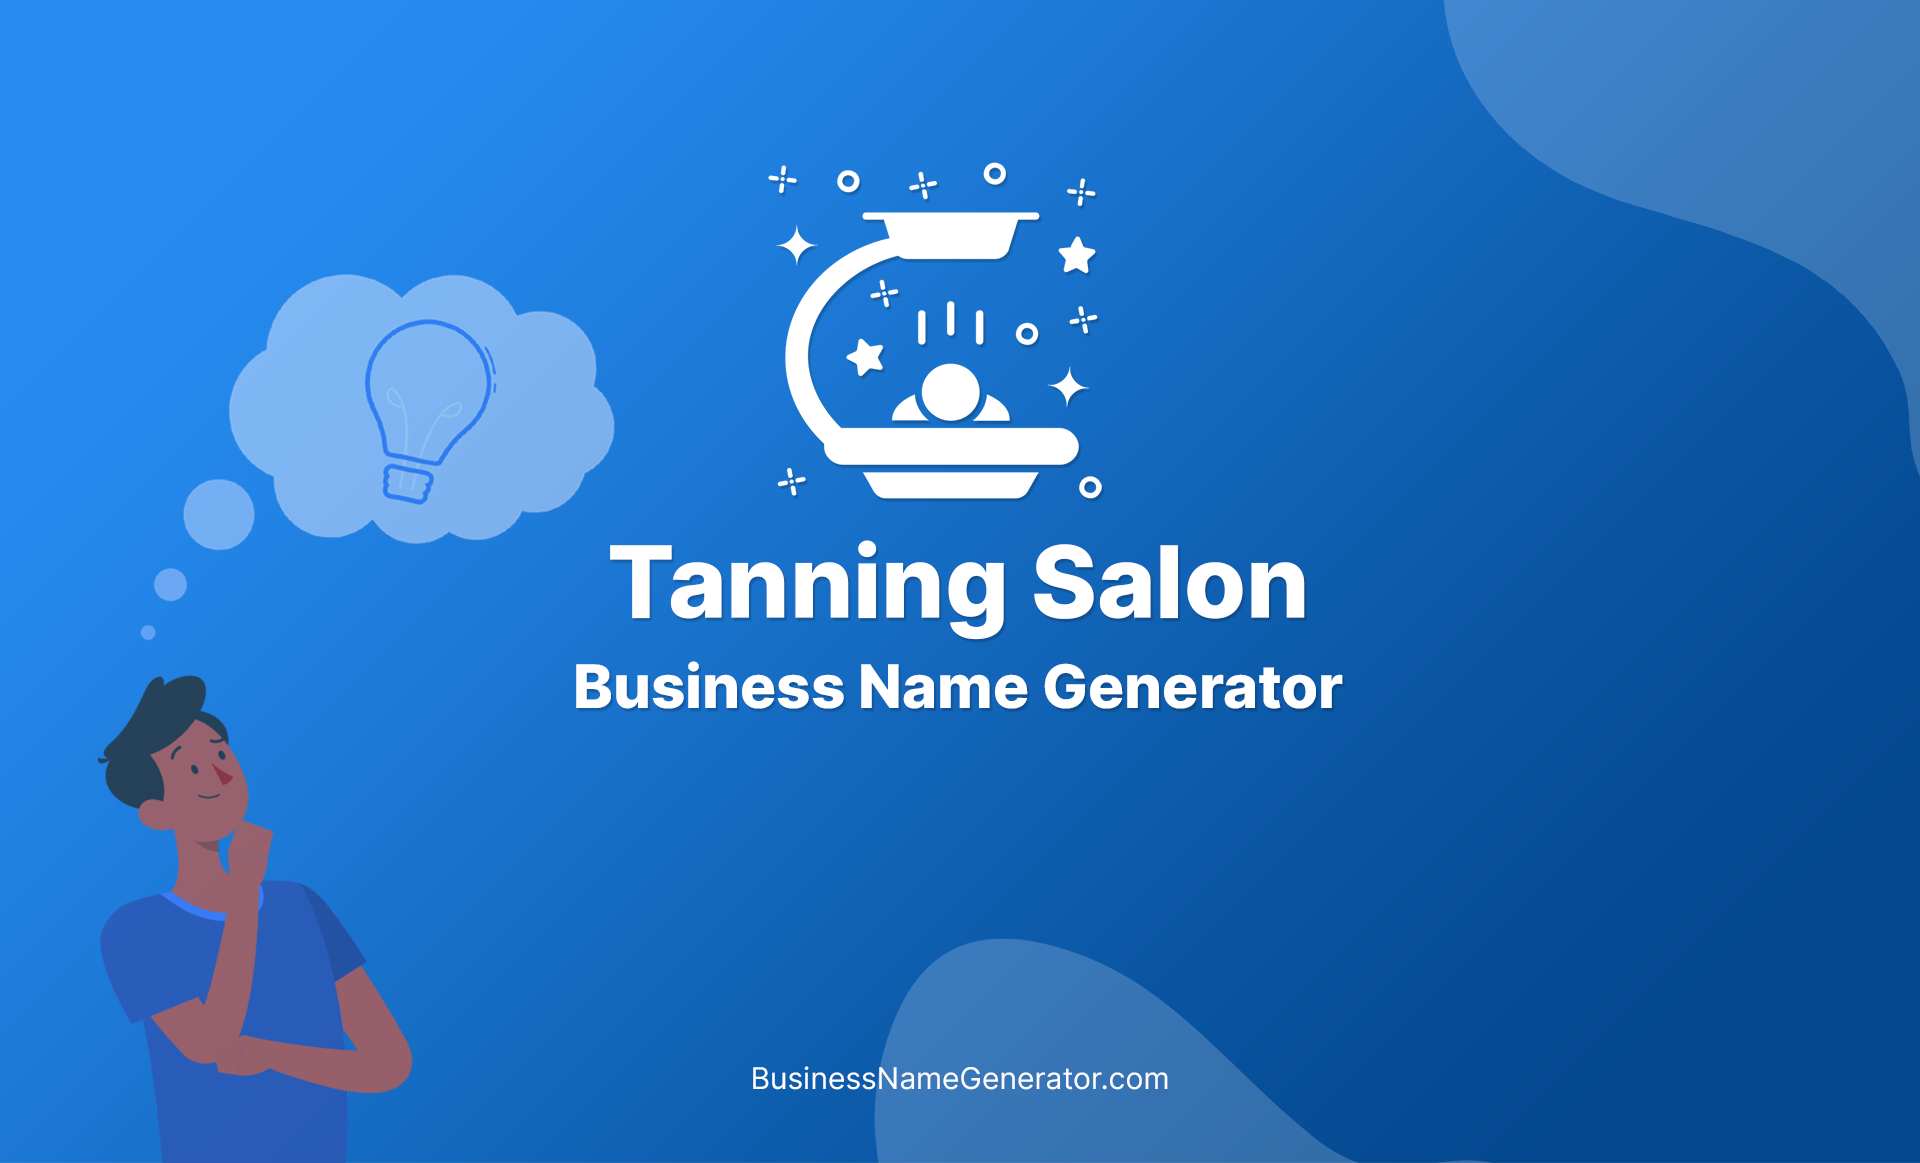 Tanning Salon Business Name Generator